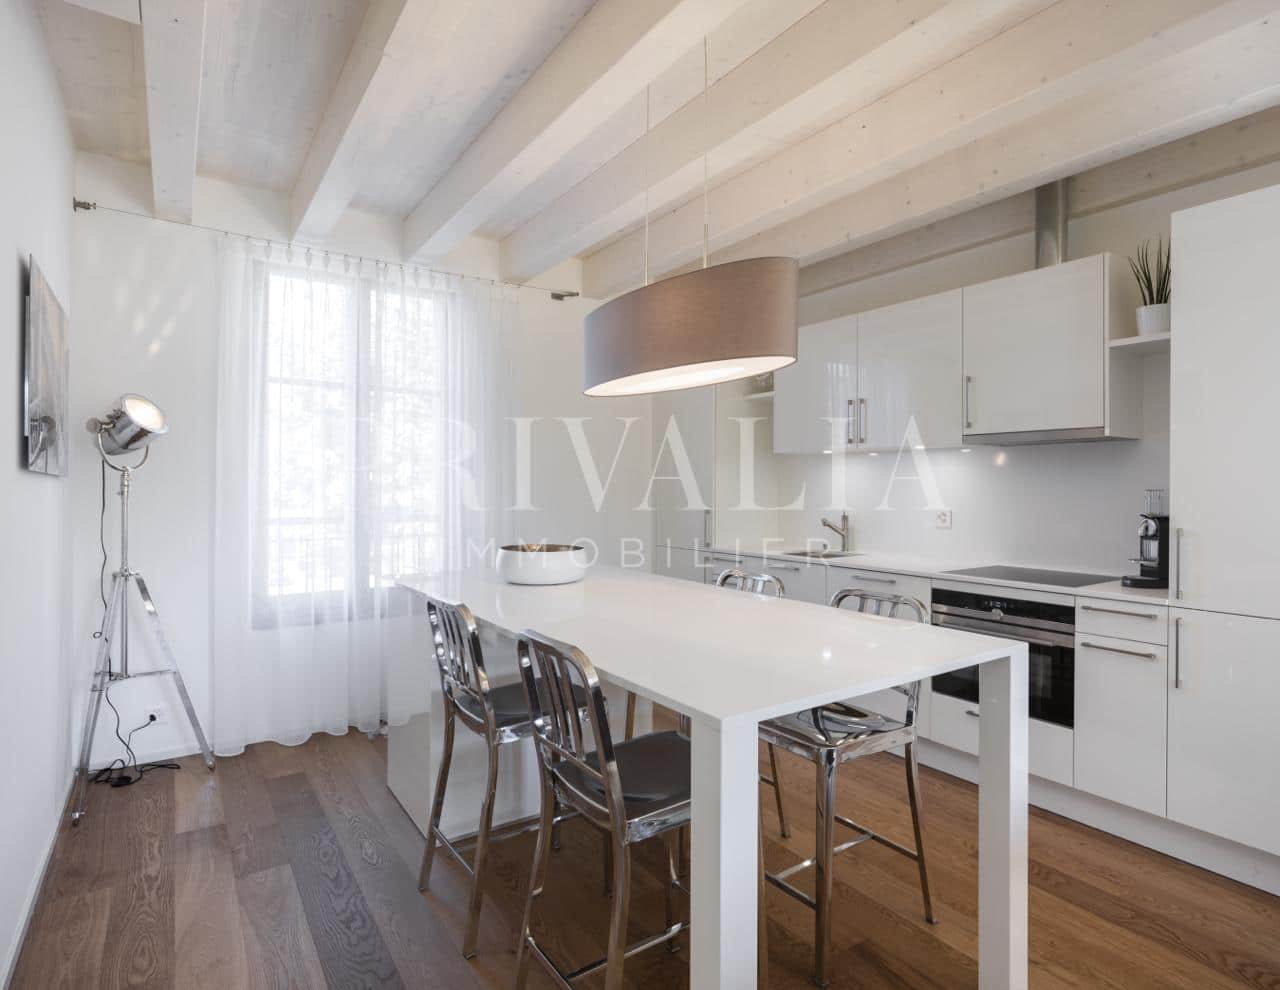 PrivaliaMagnificent contemporary furnished 3-room duplex apartment